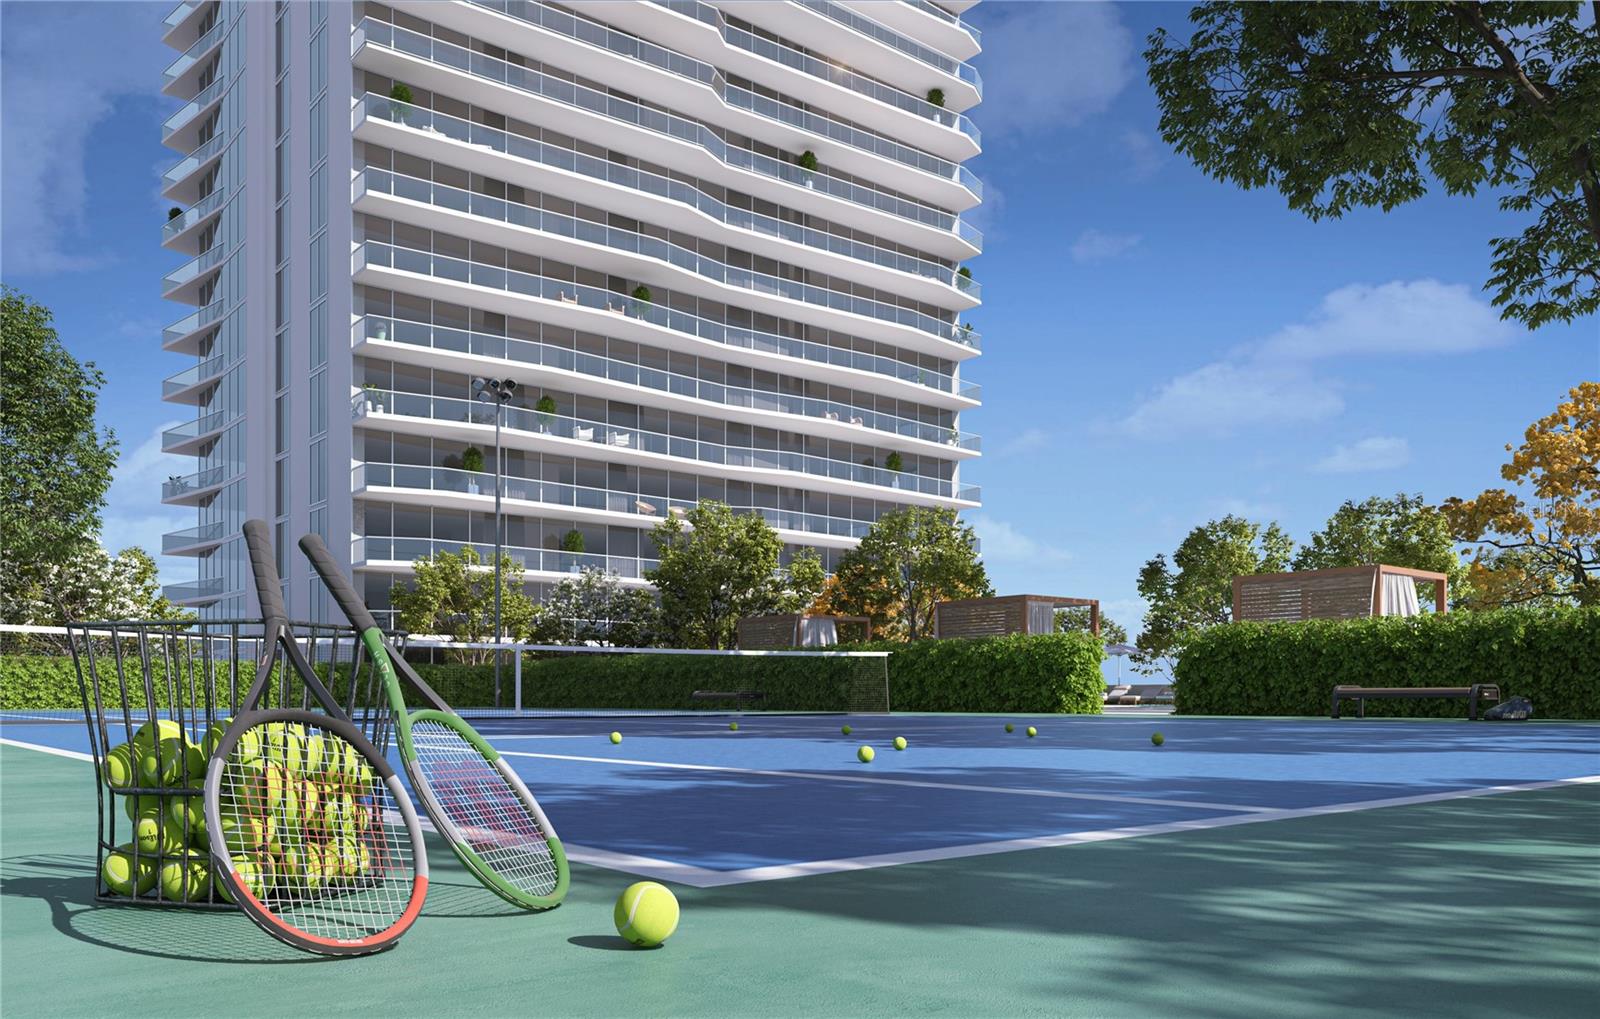 Tennis & Pickle Ball Court